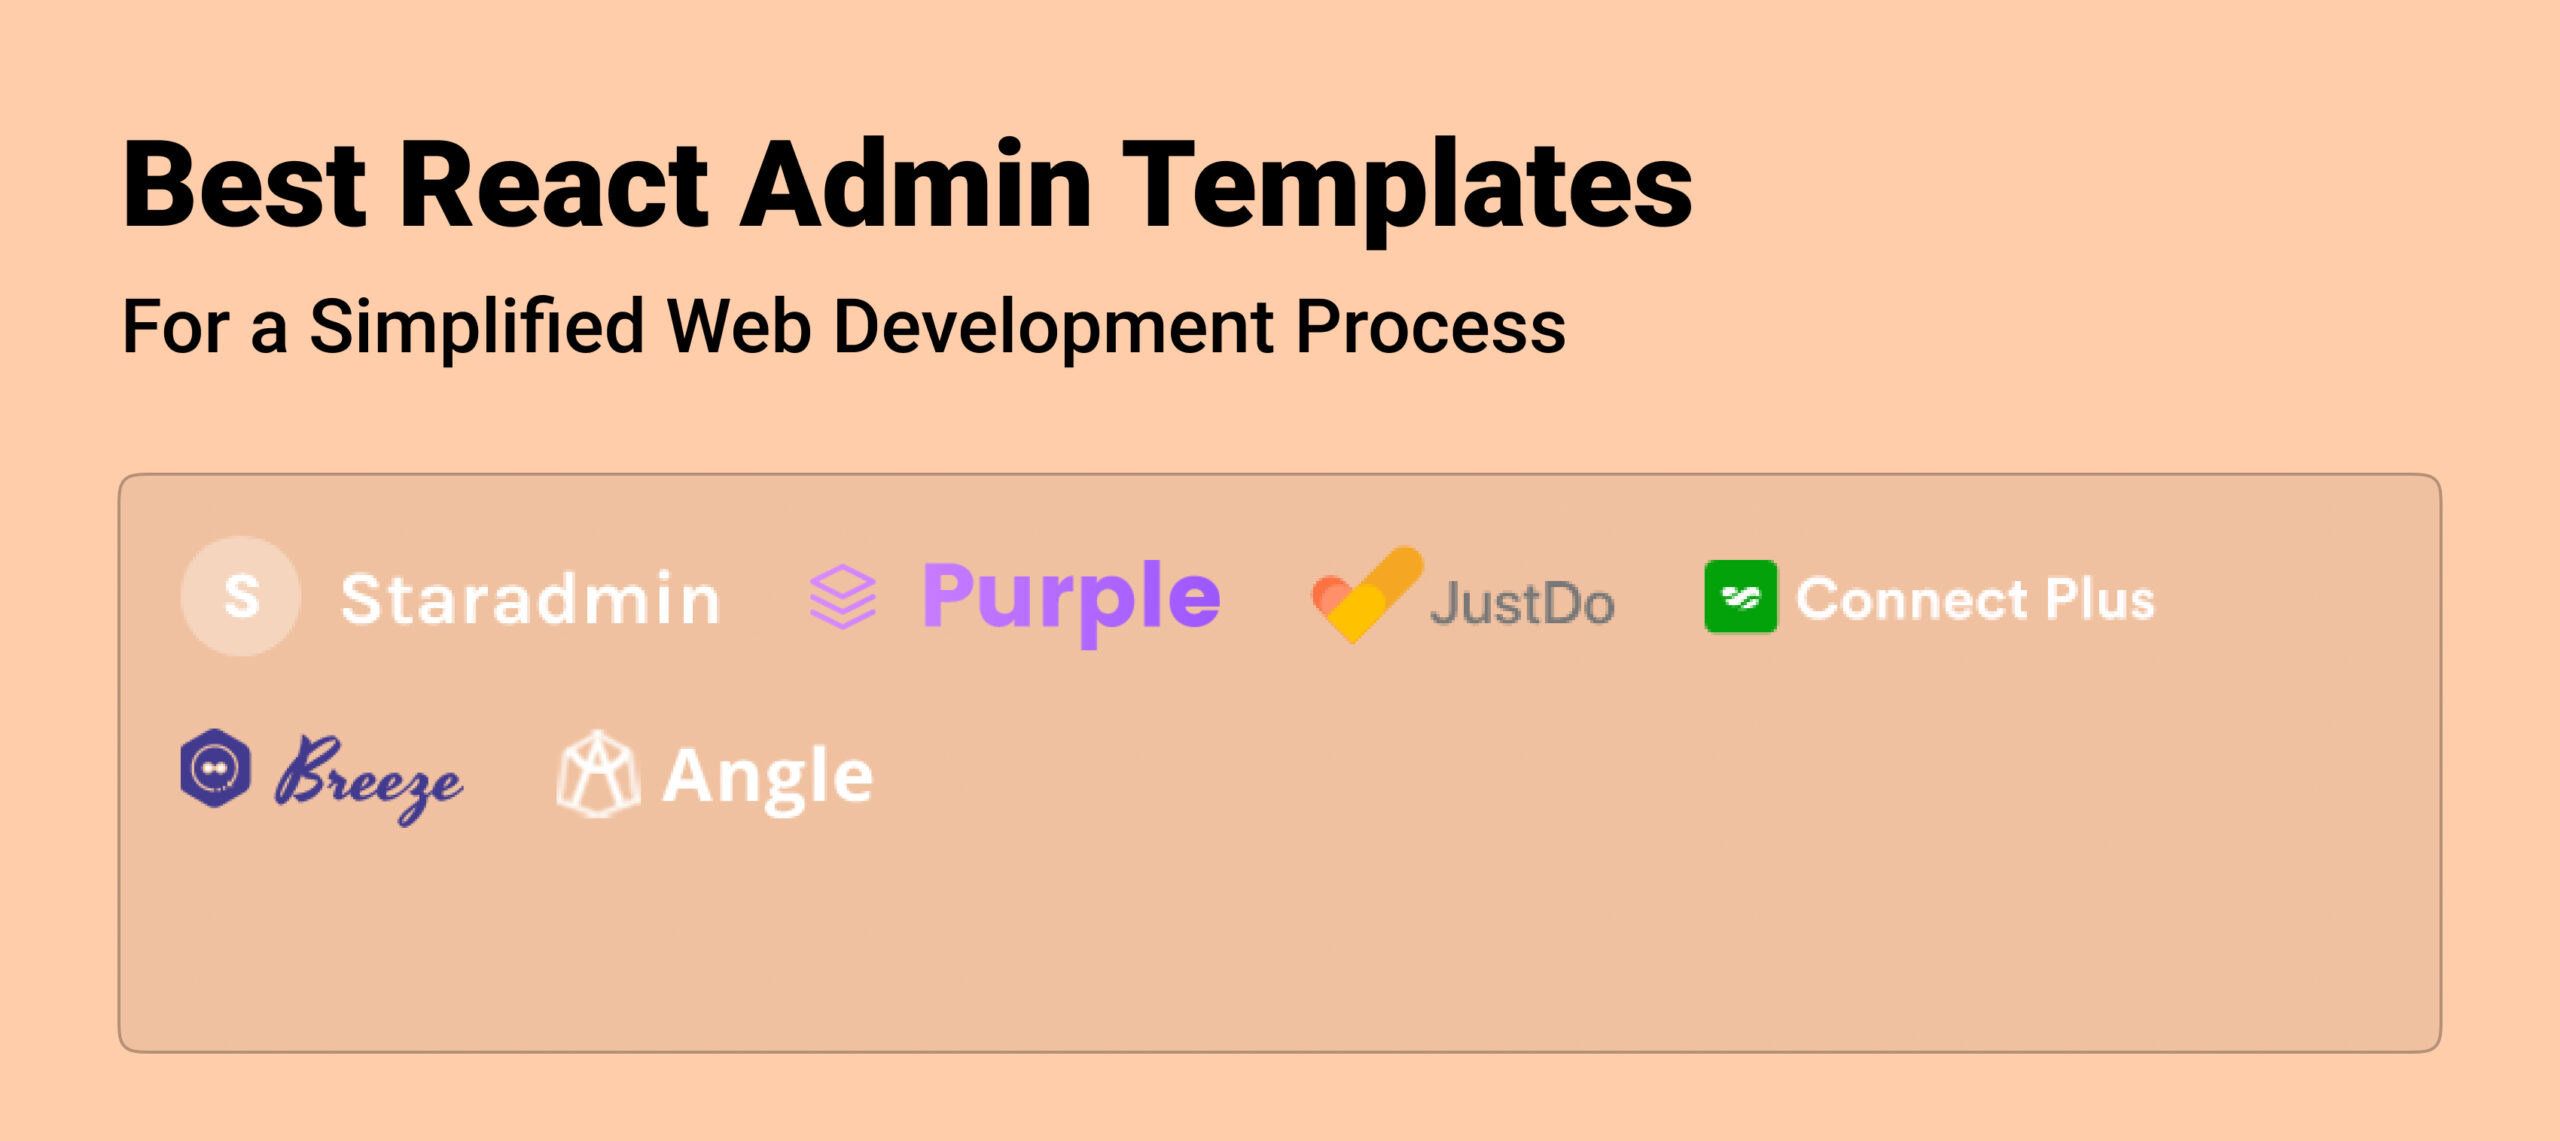  Best React Admin Templates For a Simplified Web Development Process